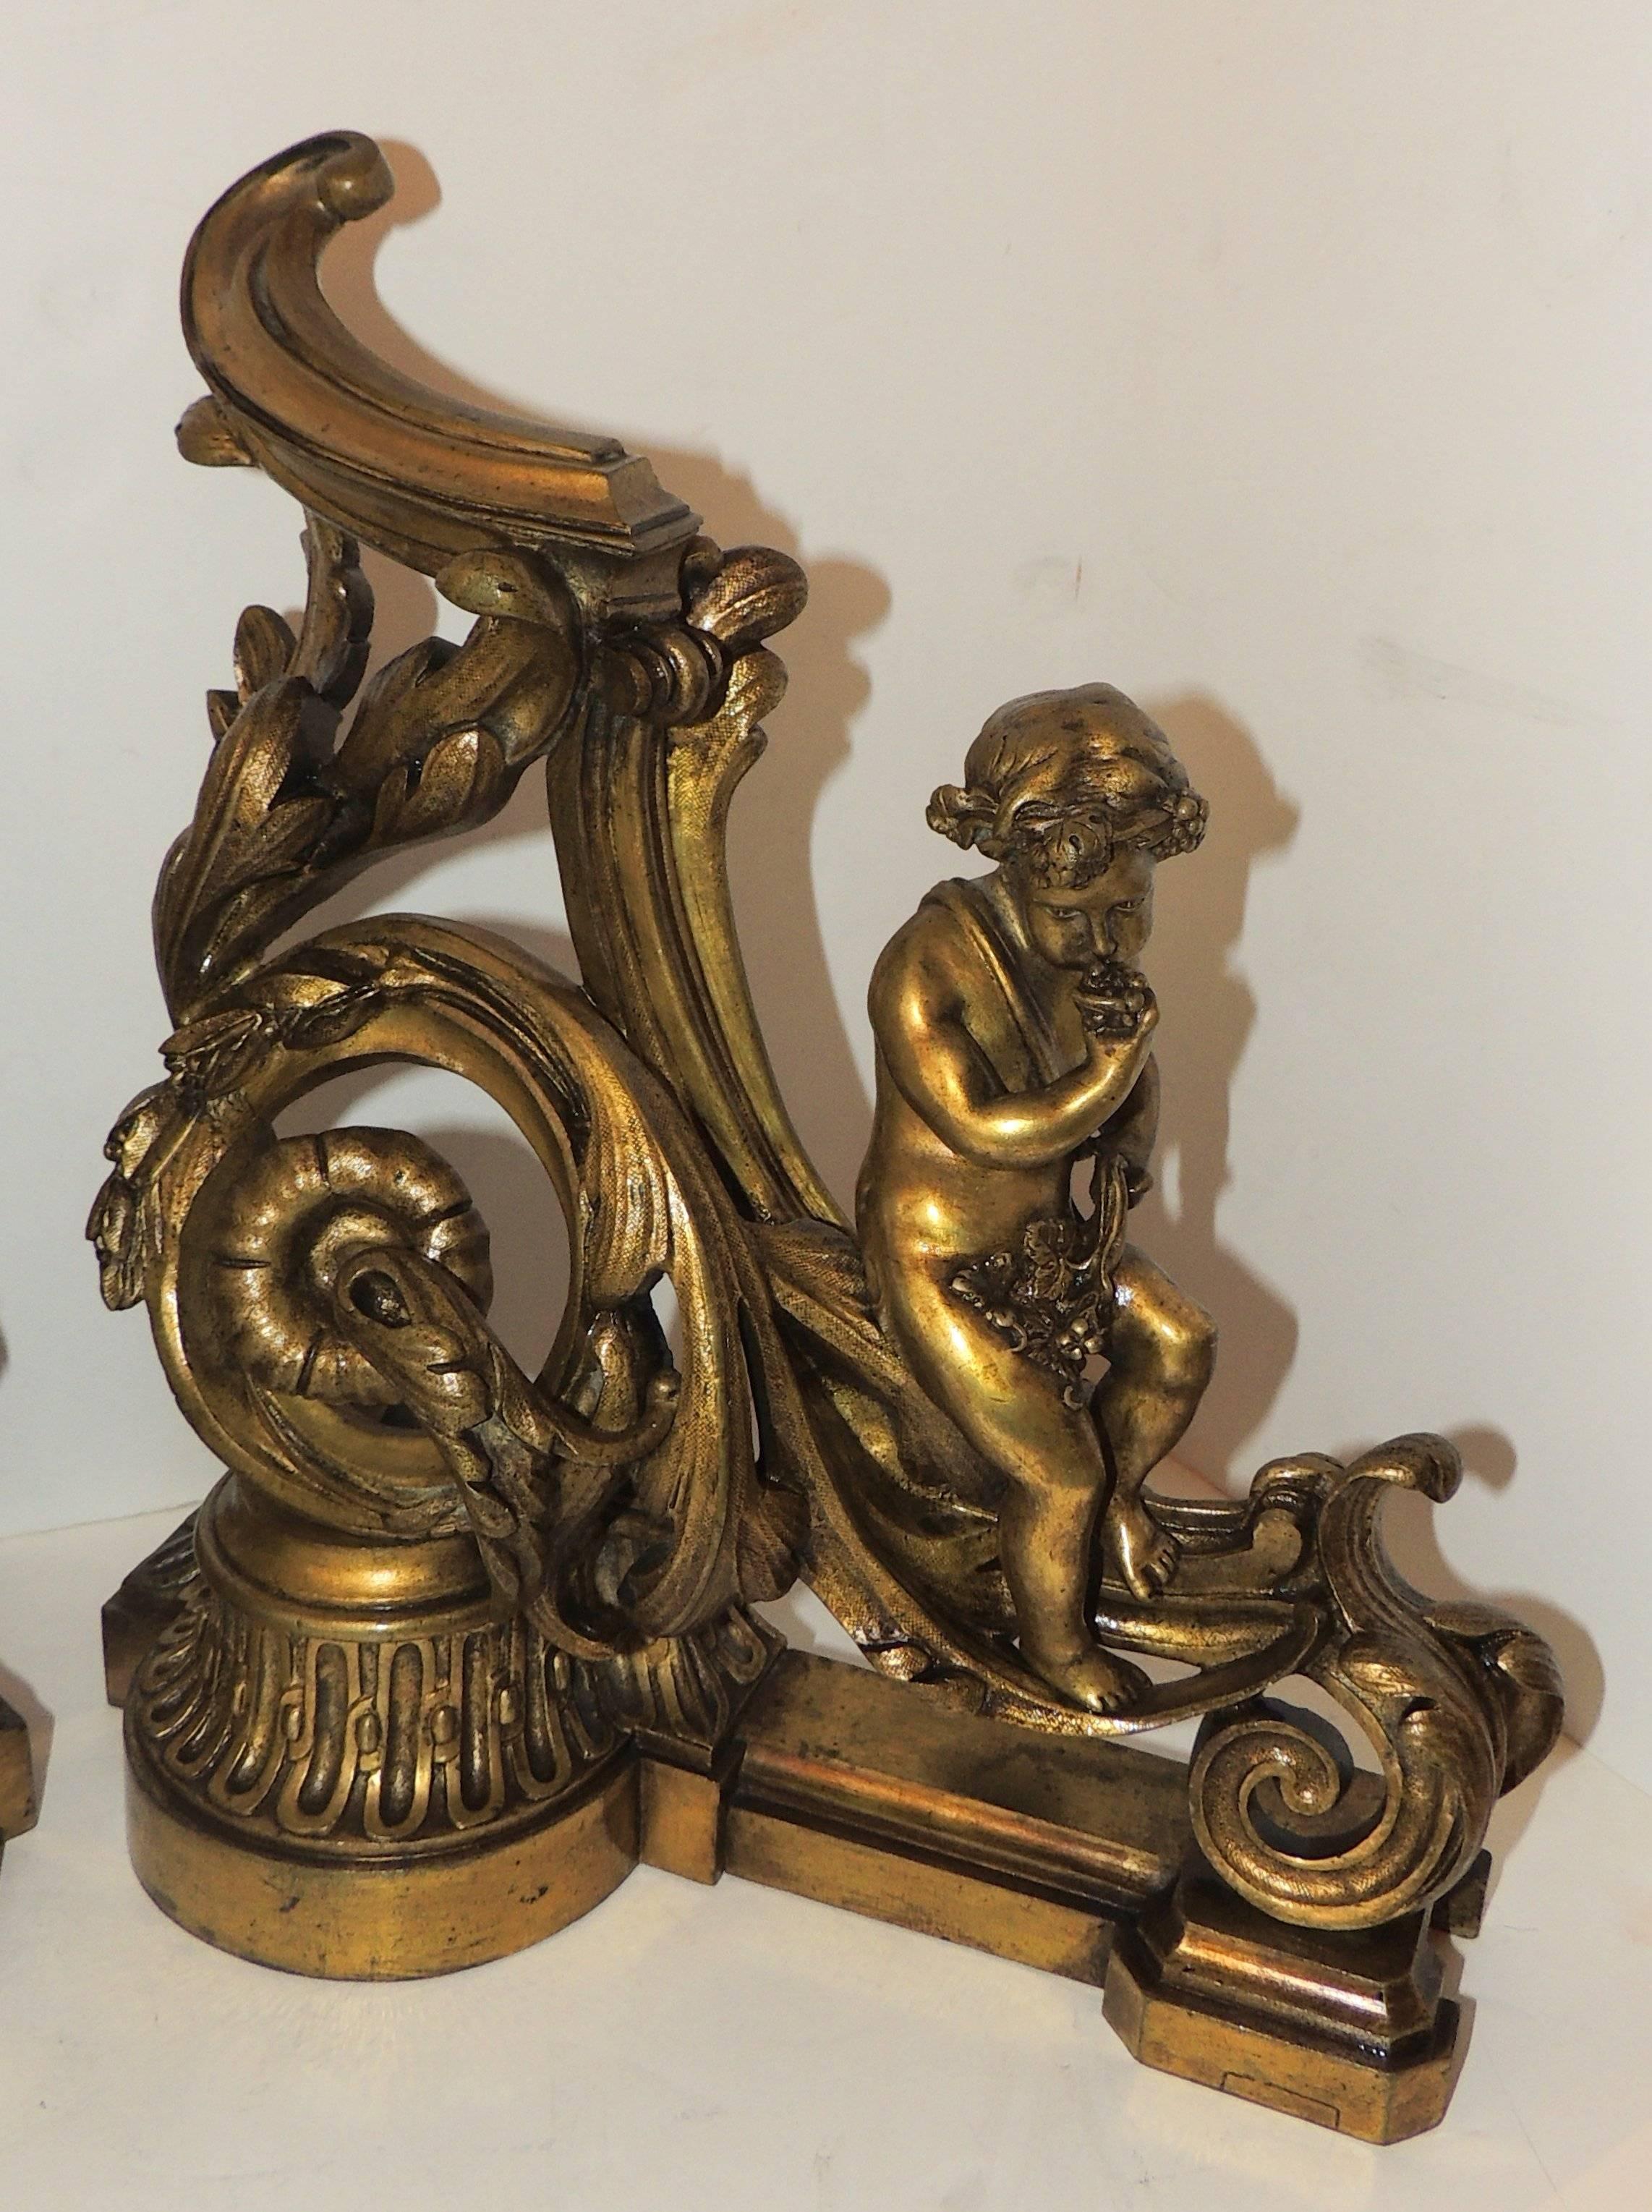 Wonderful French gilt bronze cherub putti fireplace fire place Chenets andirons.

Measures: 12" W x 13.5 " H x 6 " D.